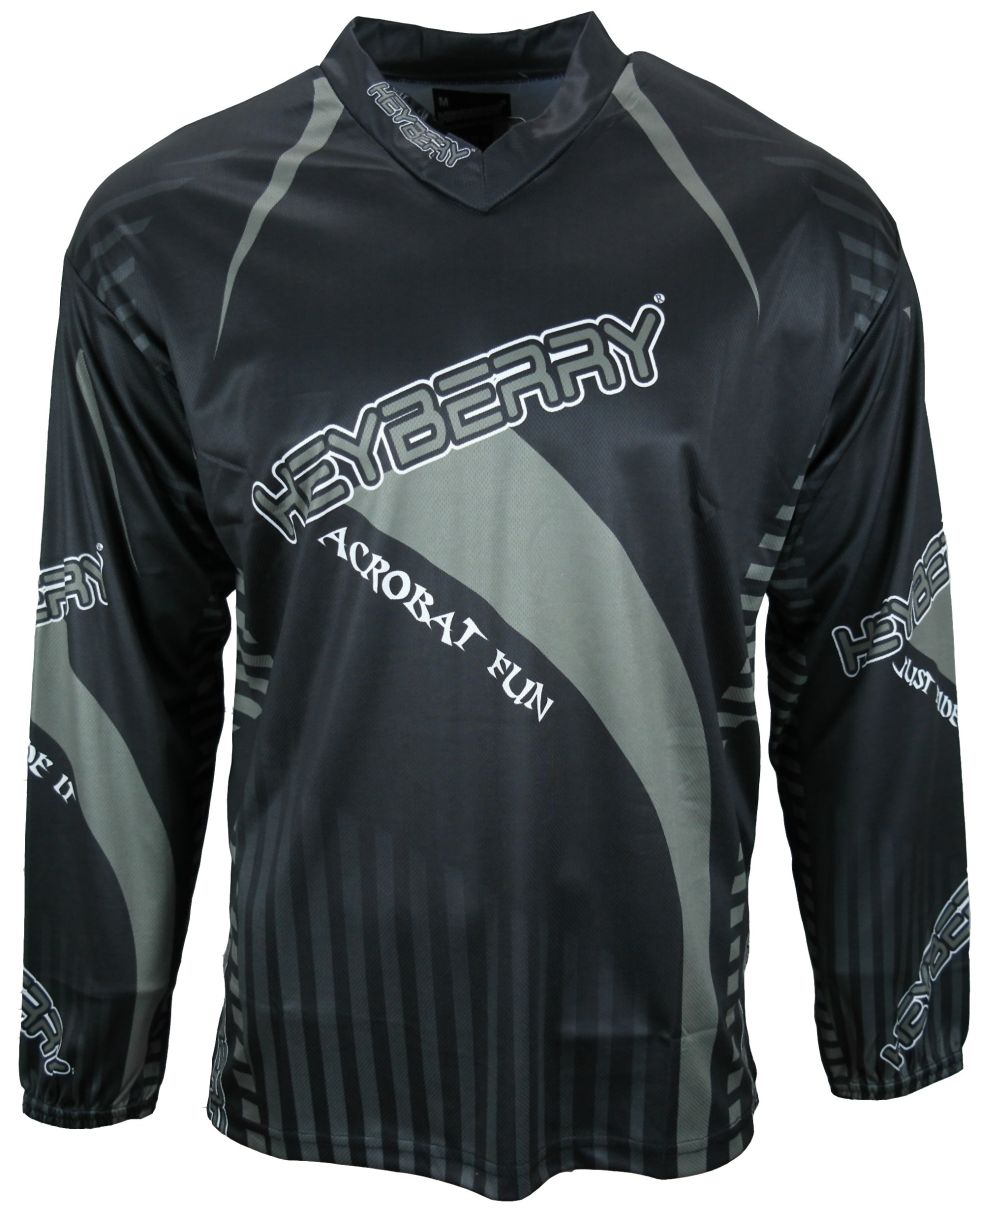 Heyberry Motocross MX Shirt Jersey schwarz grau Größe M L XL XXL